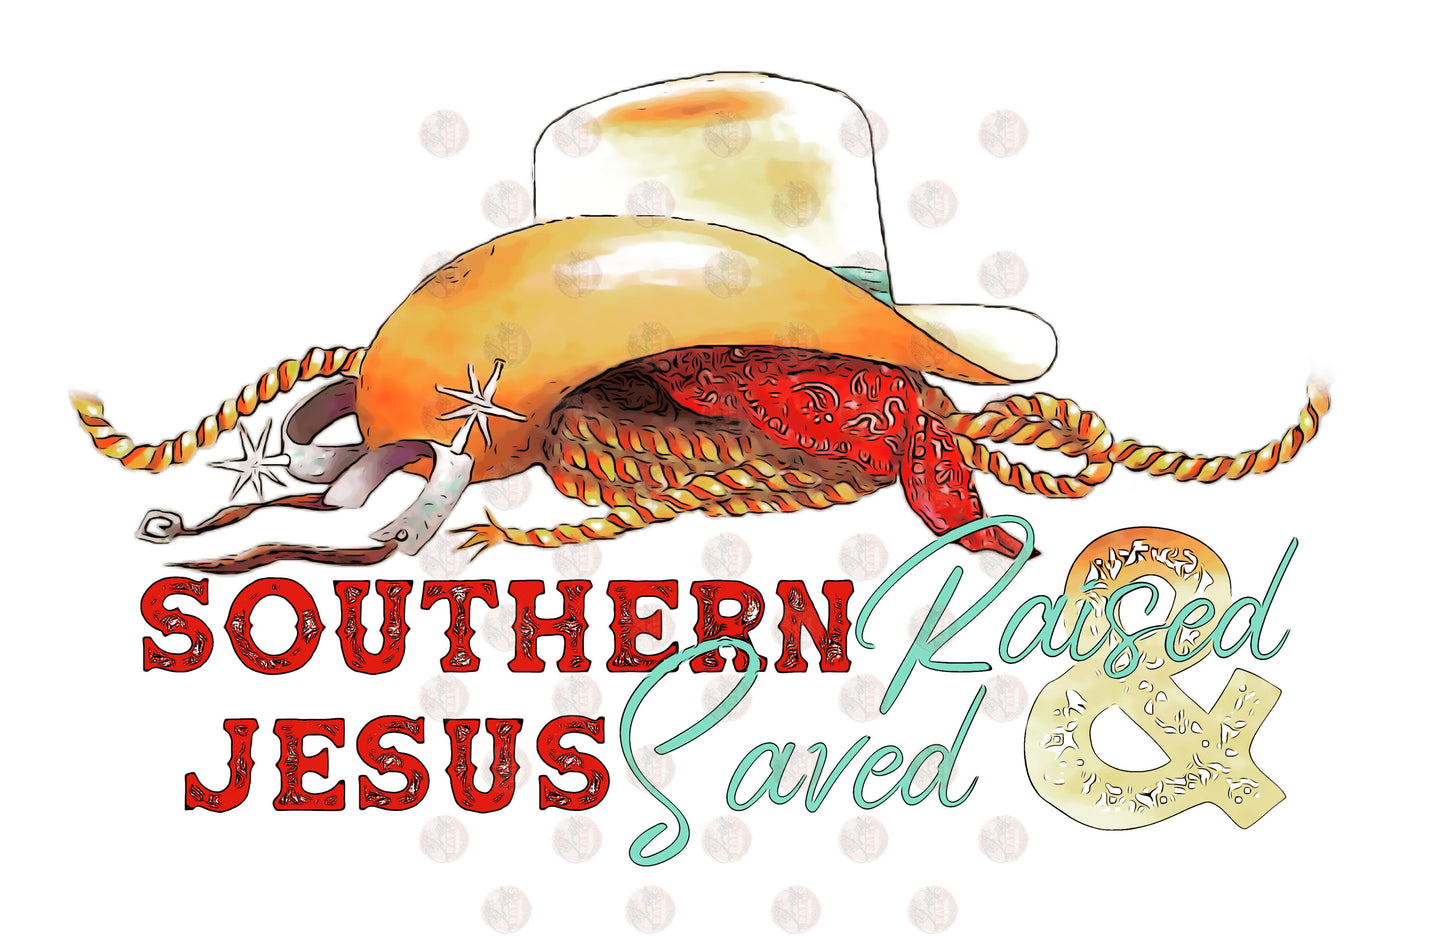 Southern Raised Jesus Saved - Sublimation Transfer